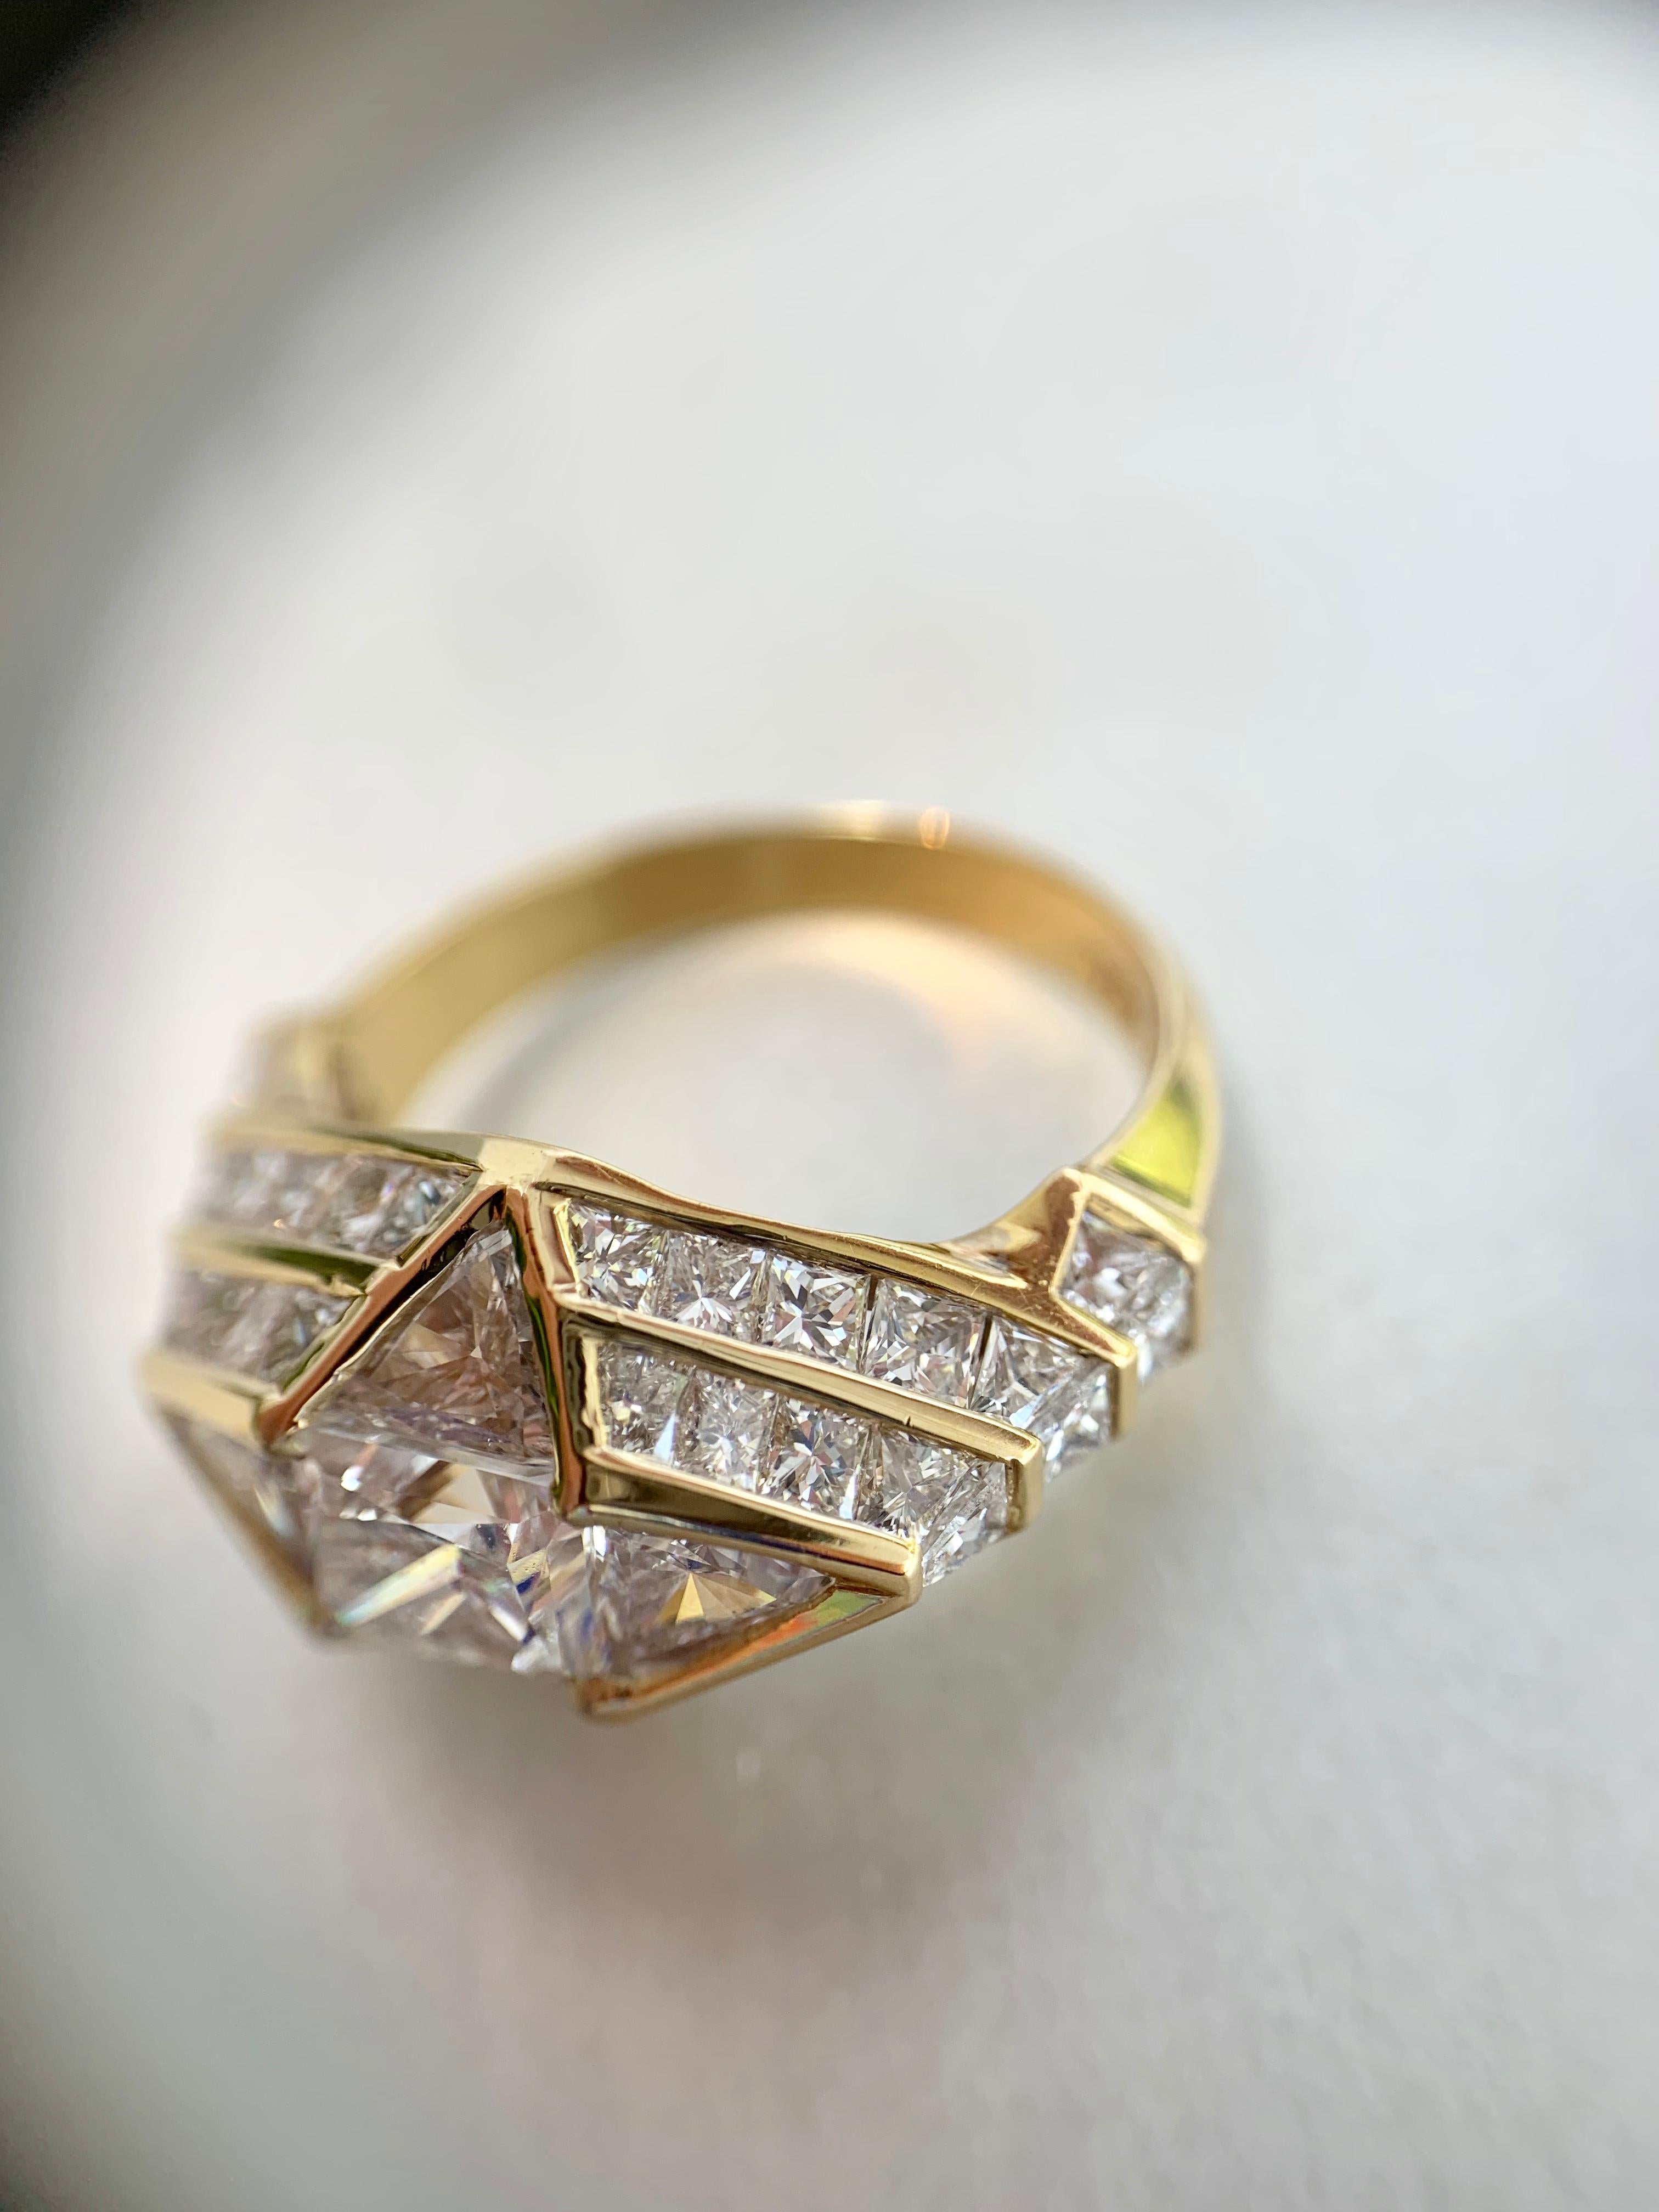 18 Karat Art Deco Inspired Diamond Ring 5.47 Carat Total Weight For Sale 11